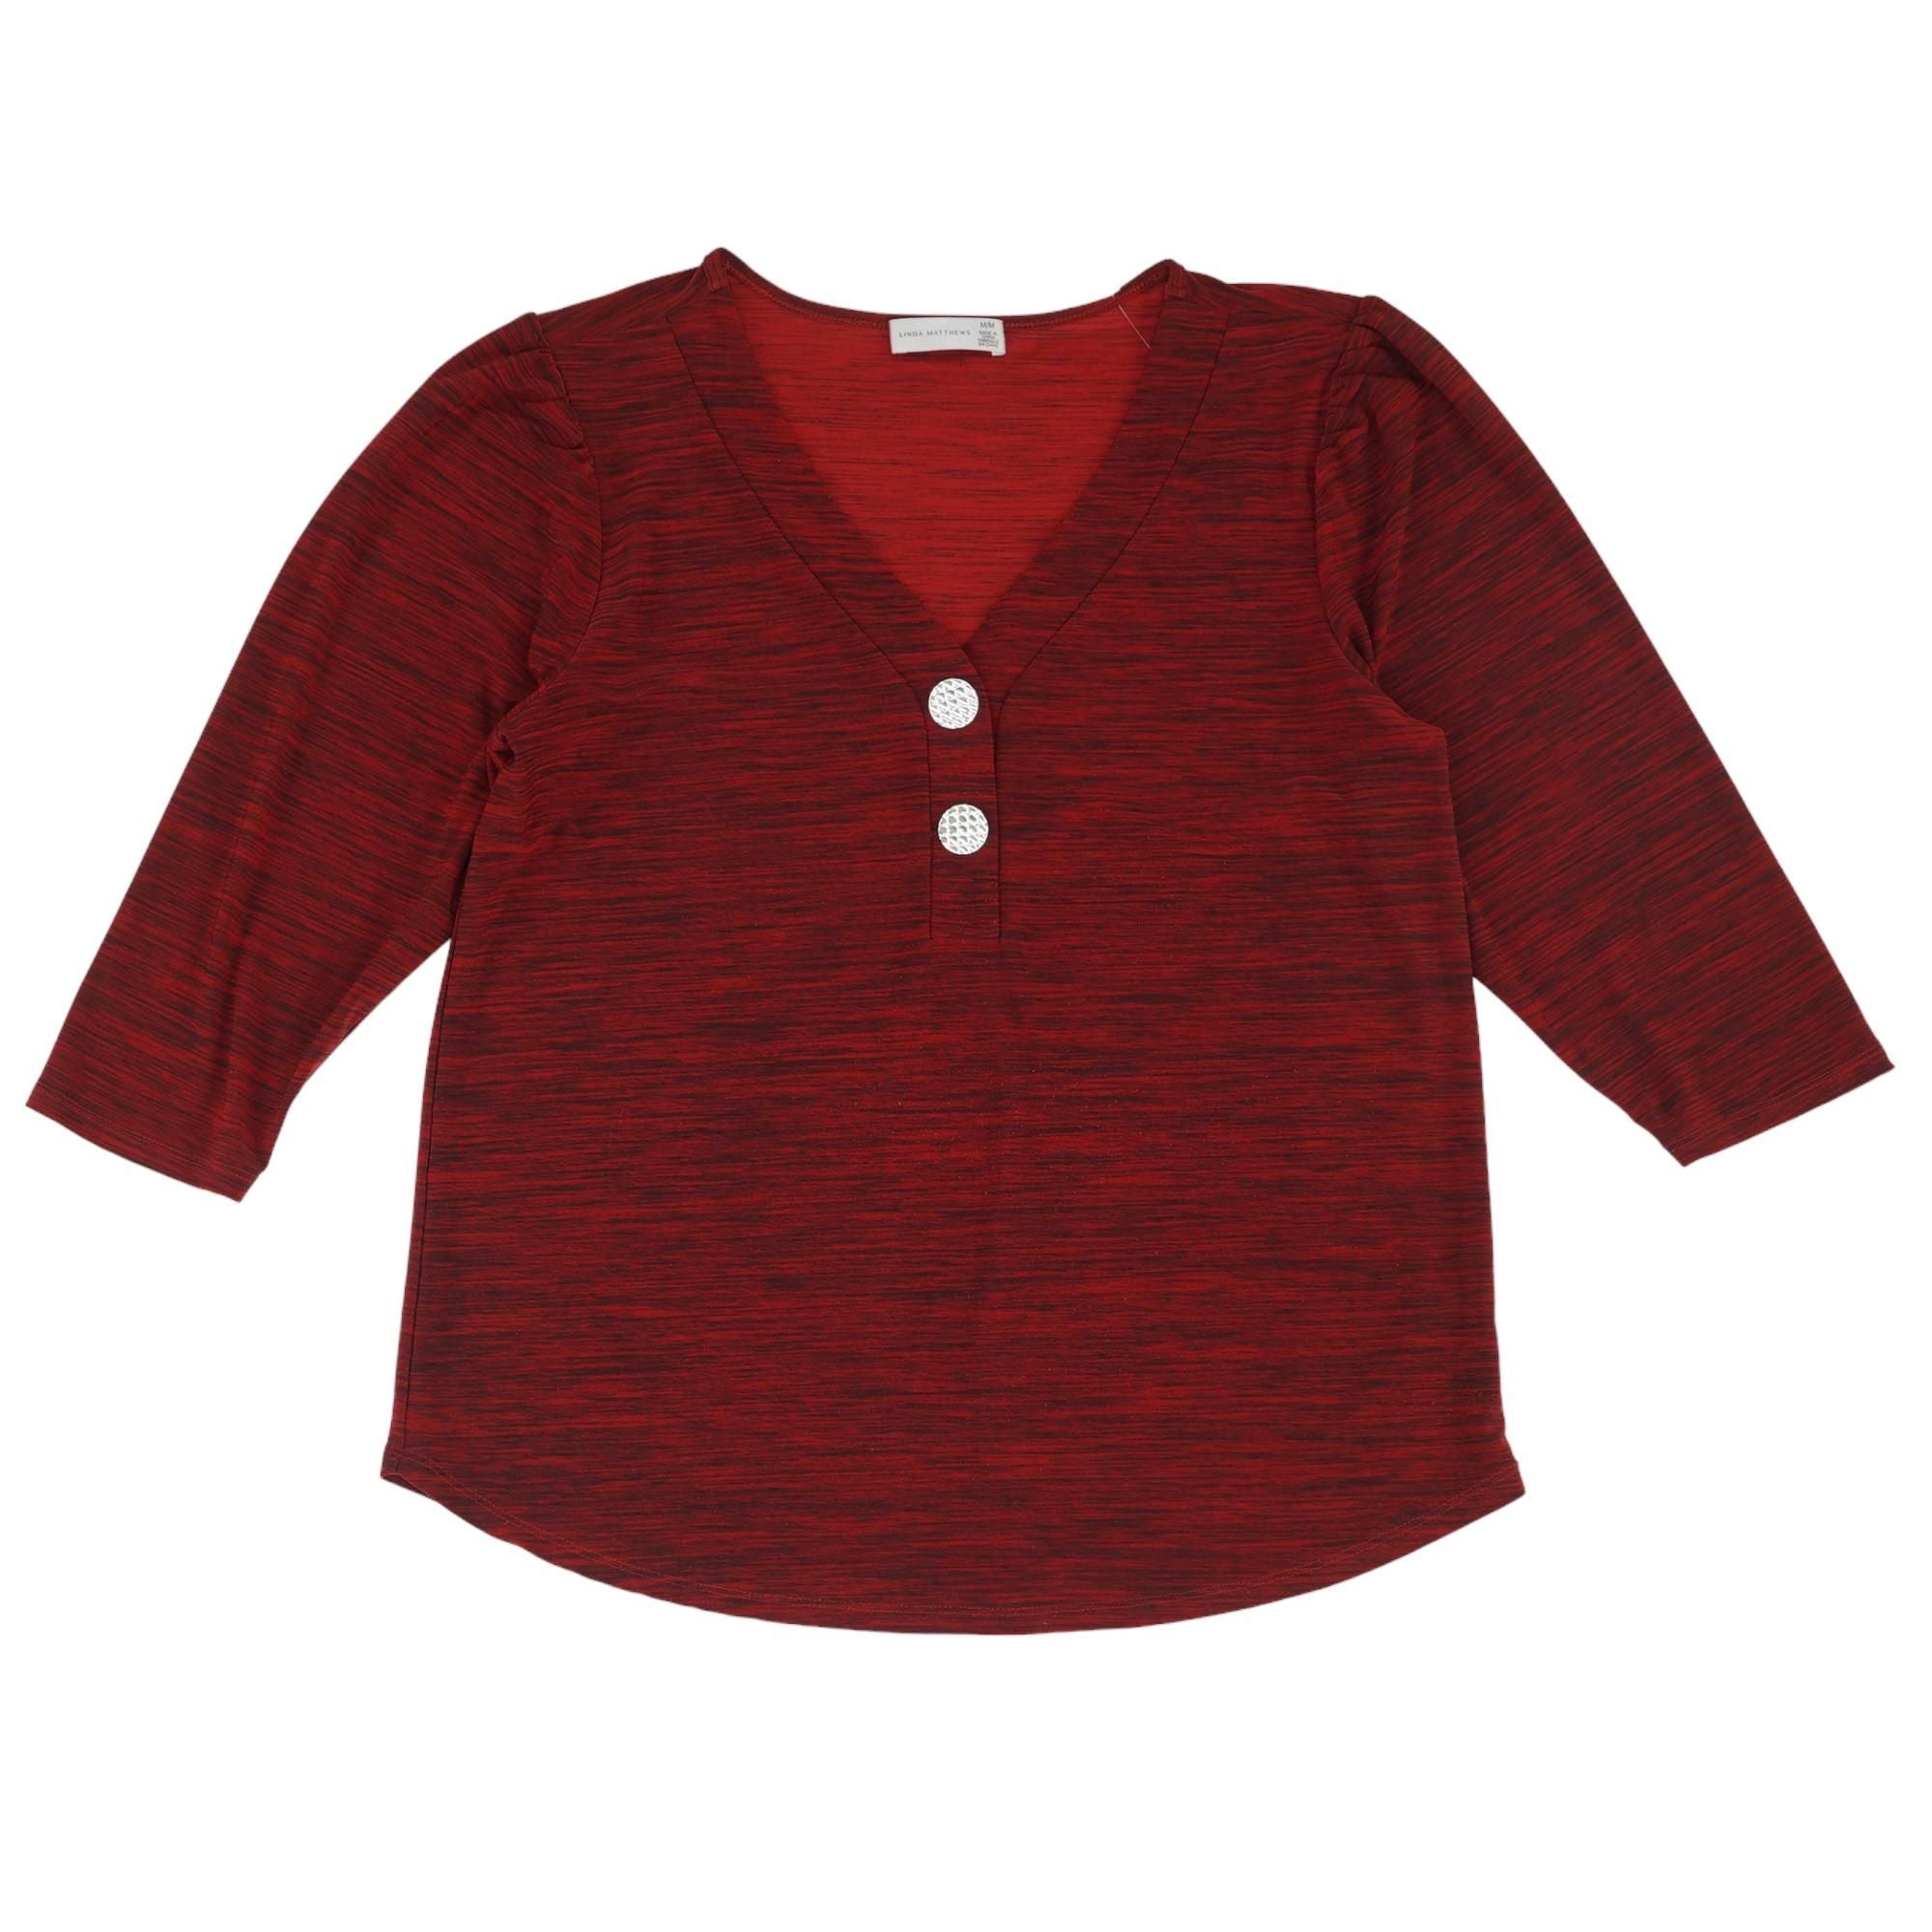 Michael Kors Womens Sleeveless Sweater Black Size 8 - Shop Linda's Stuff